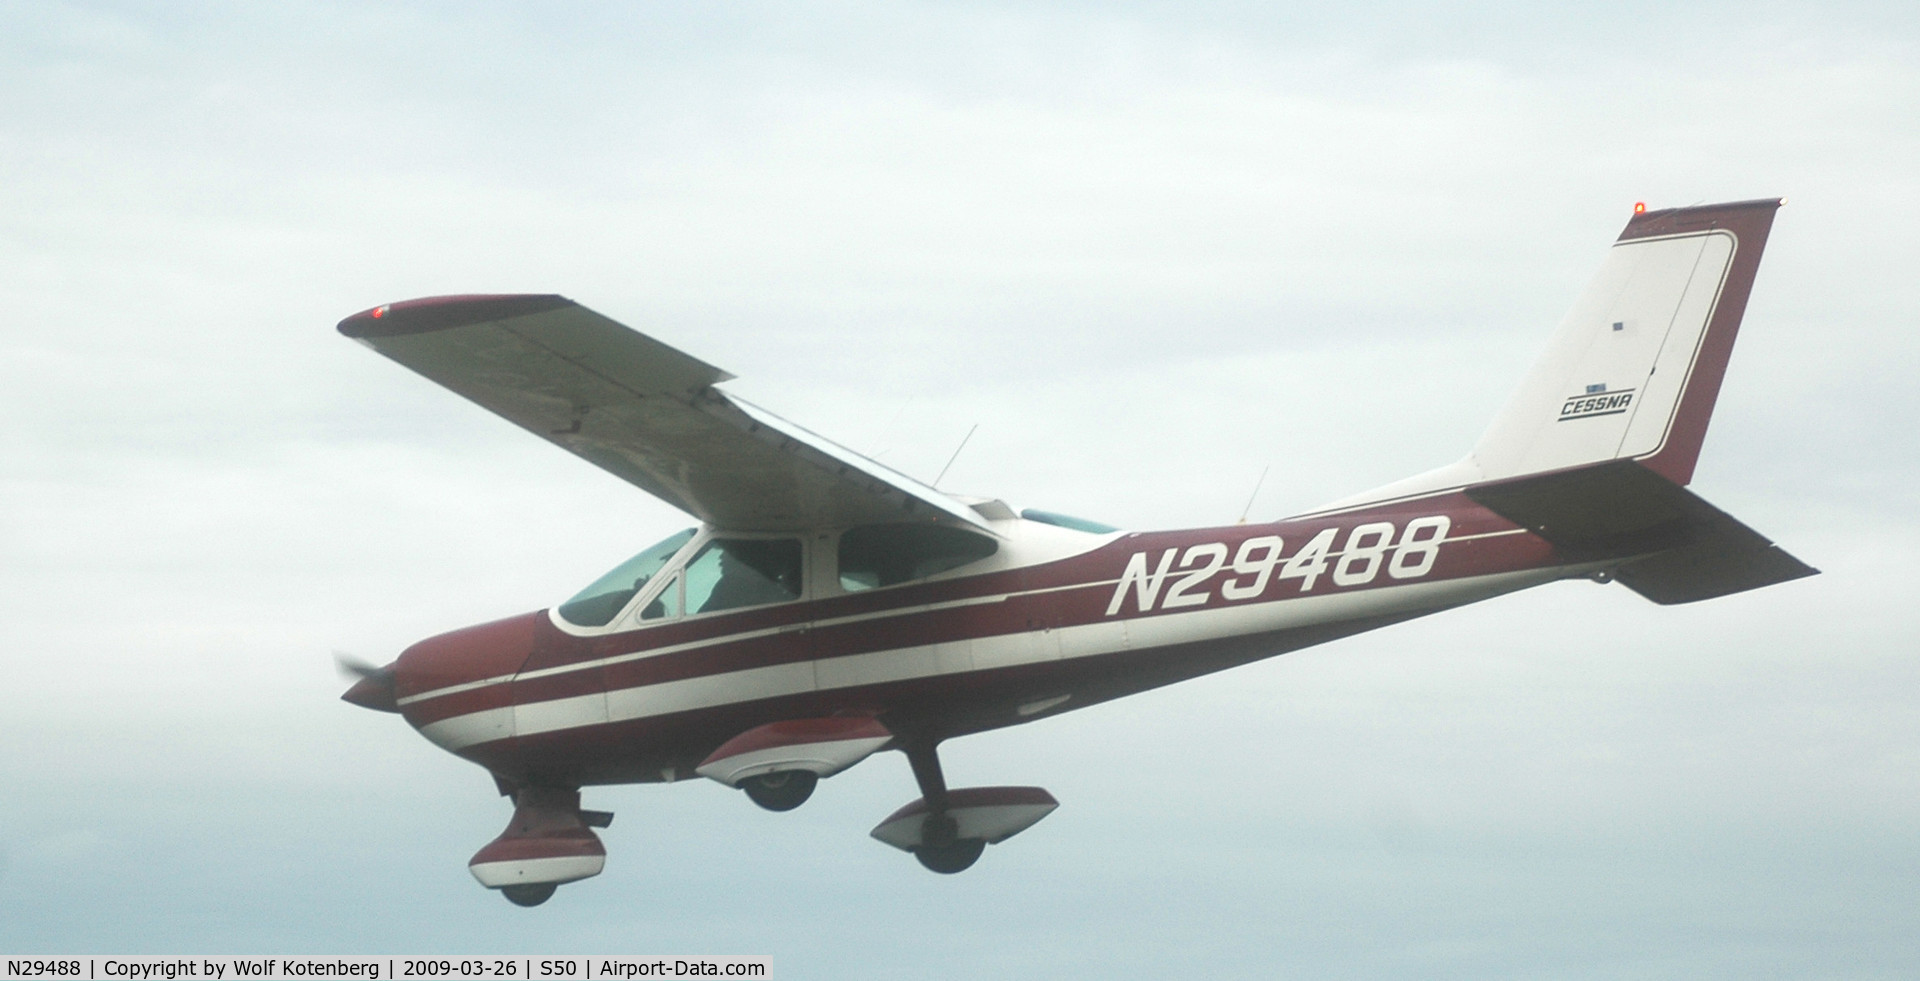 N29488, 1968 Cessna 177 Cardinal C/N 17700921, on final